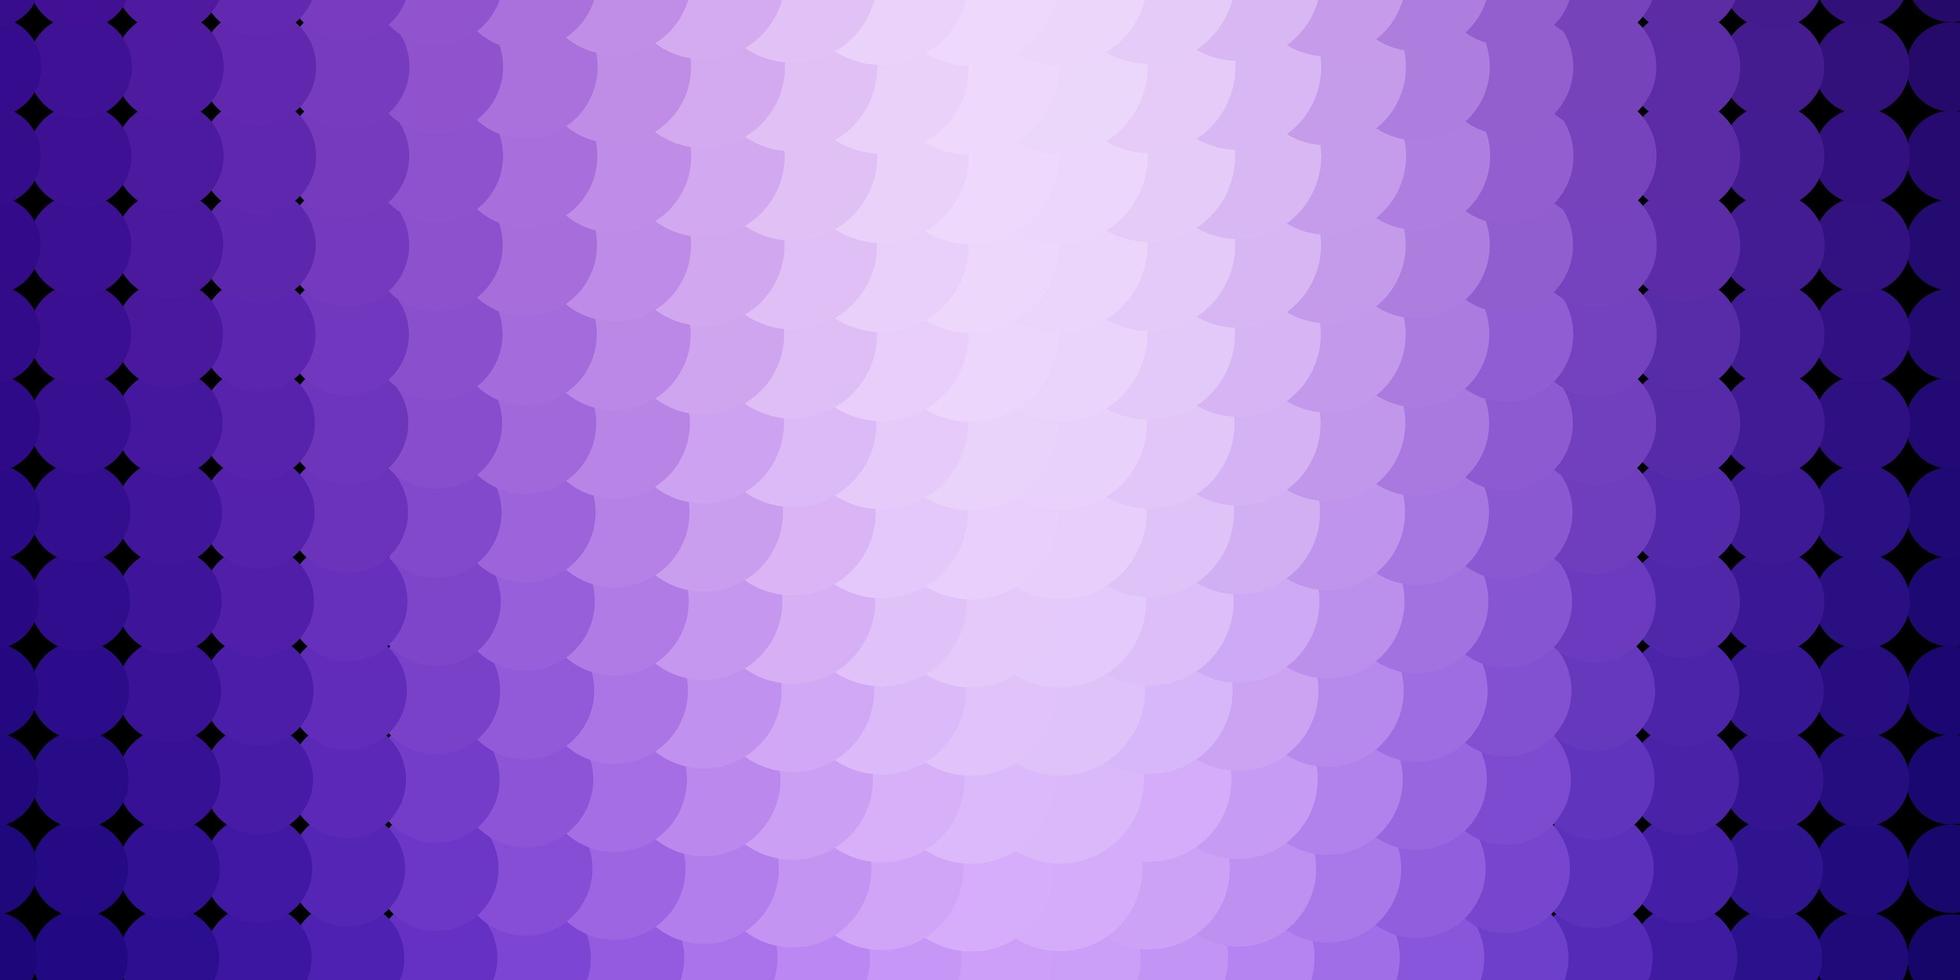 Fondo de vector púrpura claro con burbujas Ilustración abstracta moderna con patrón de formas de círculo colorido para sitios web